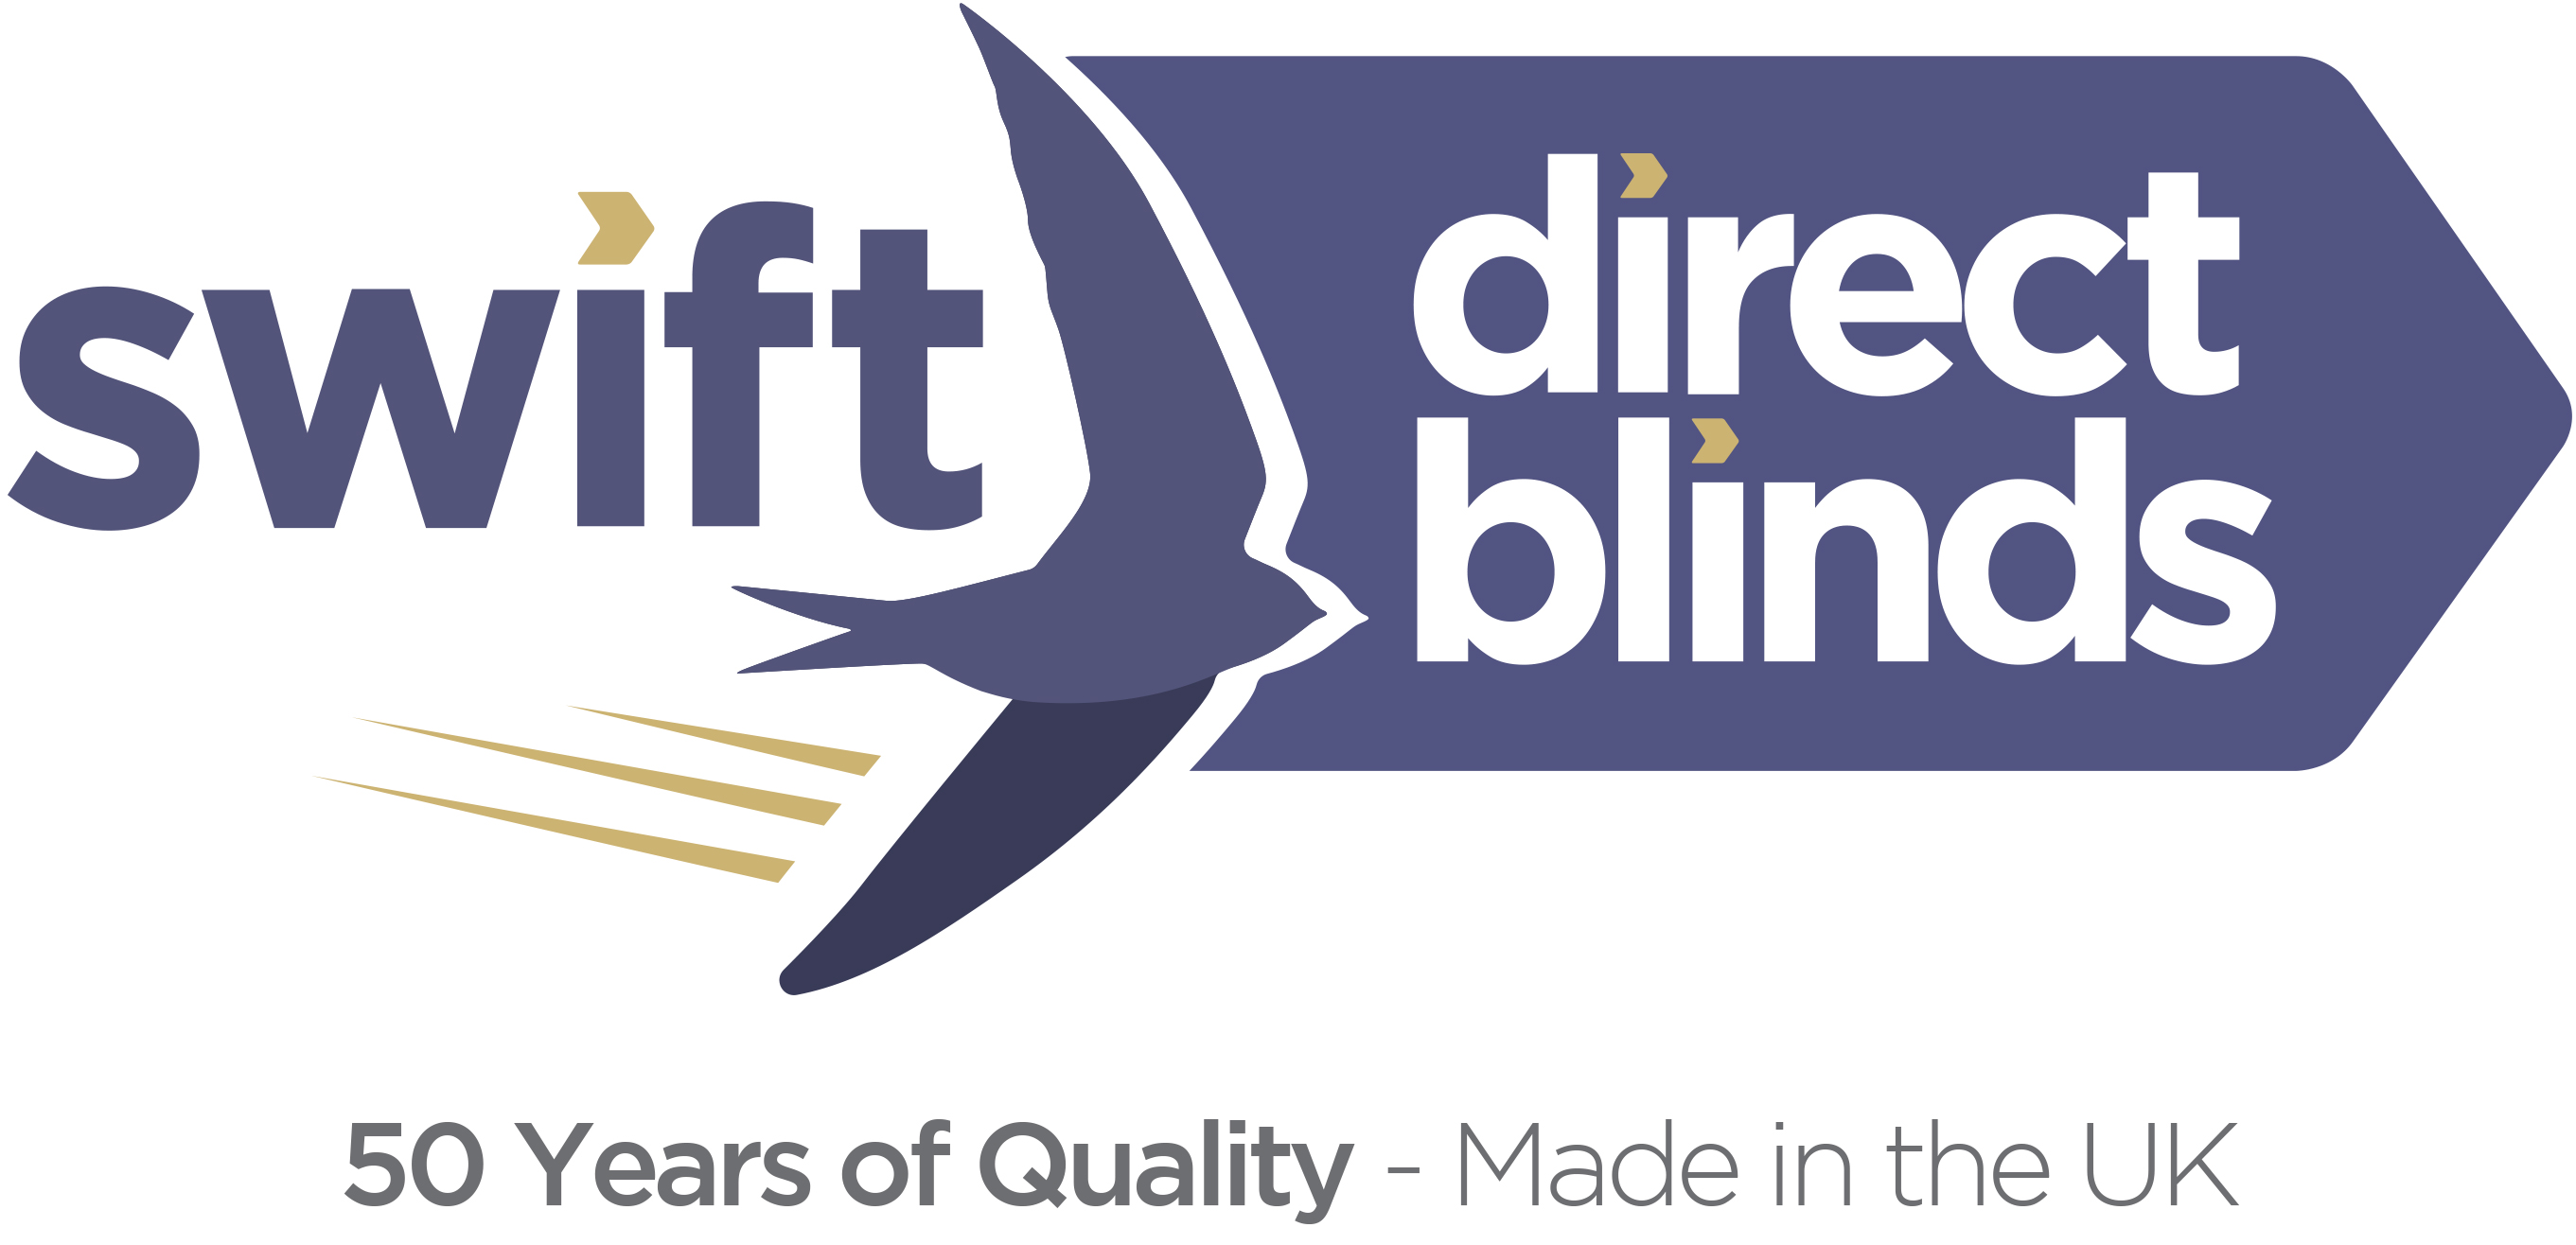 Swift Direct Blinds vouchers